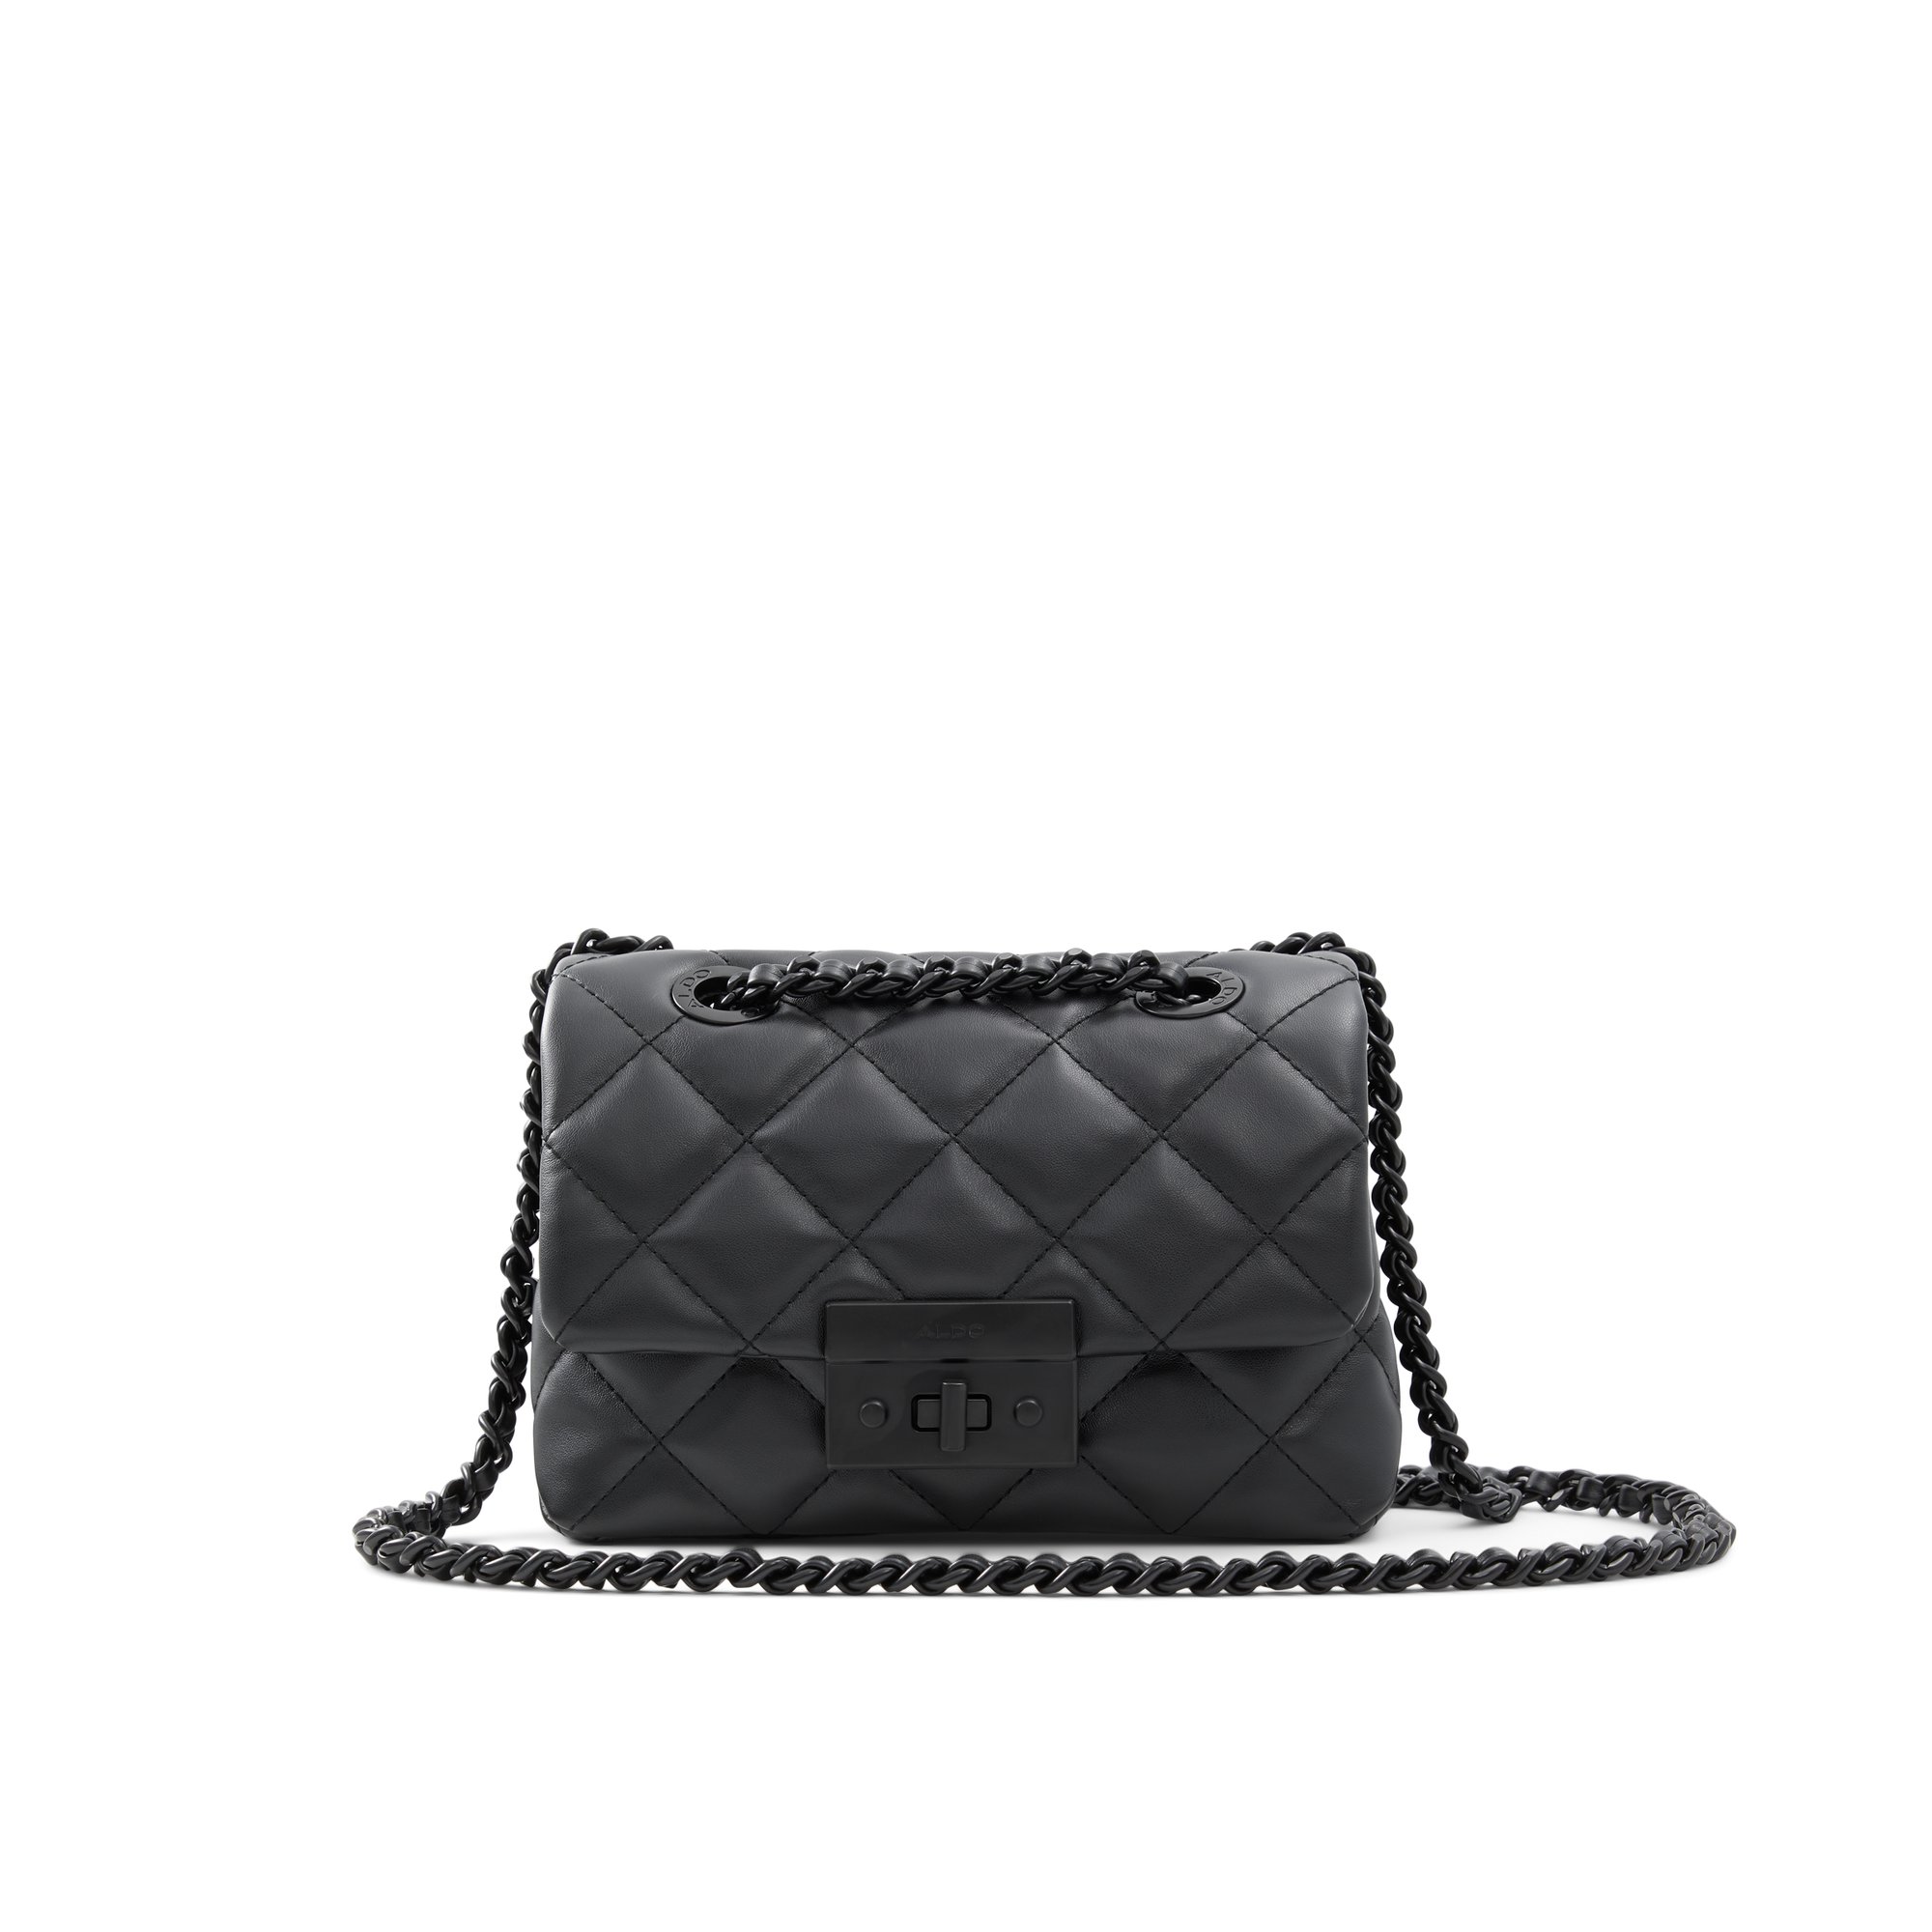 ALDO Latisse - Women's Handbags Crossbody - Black